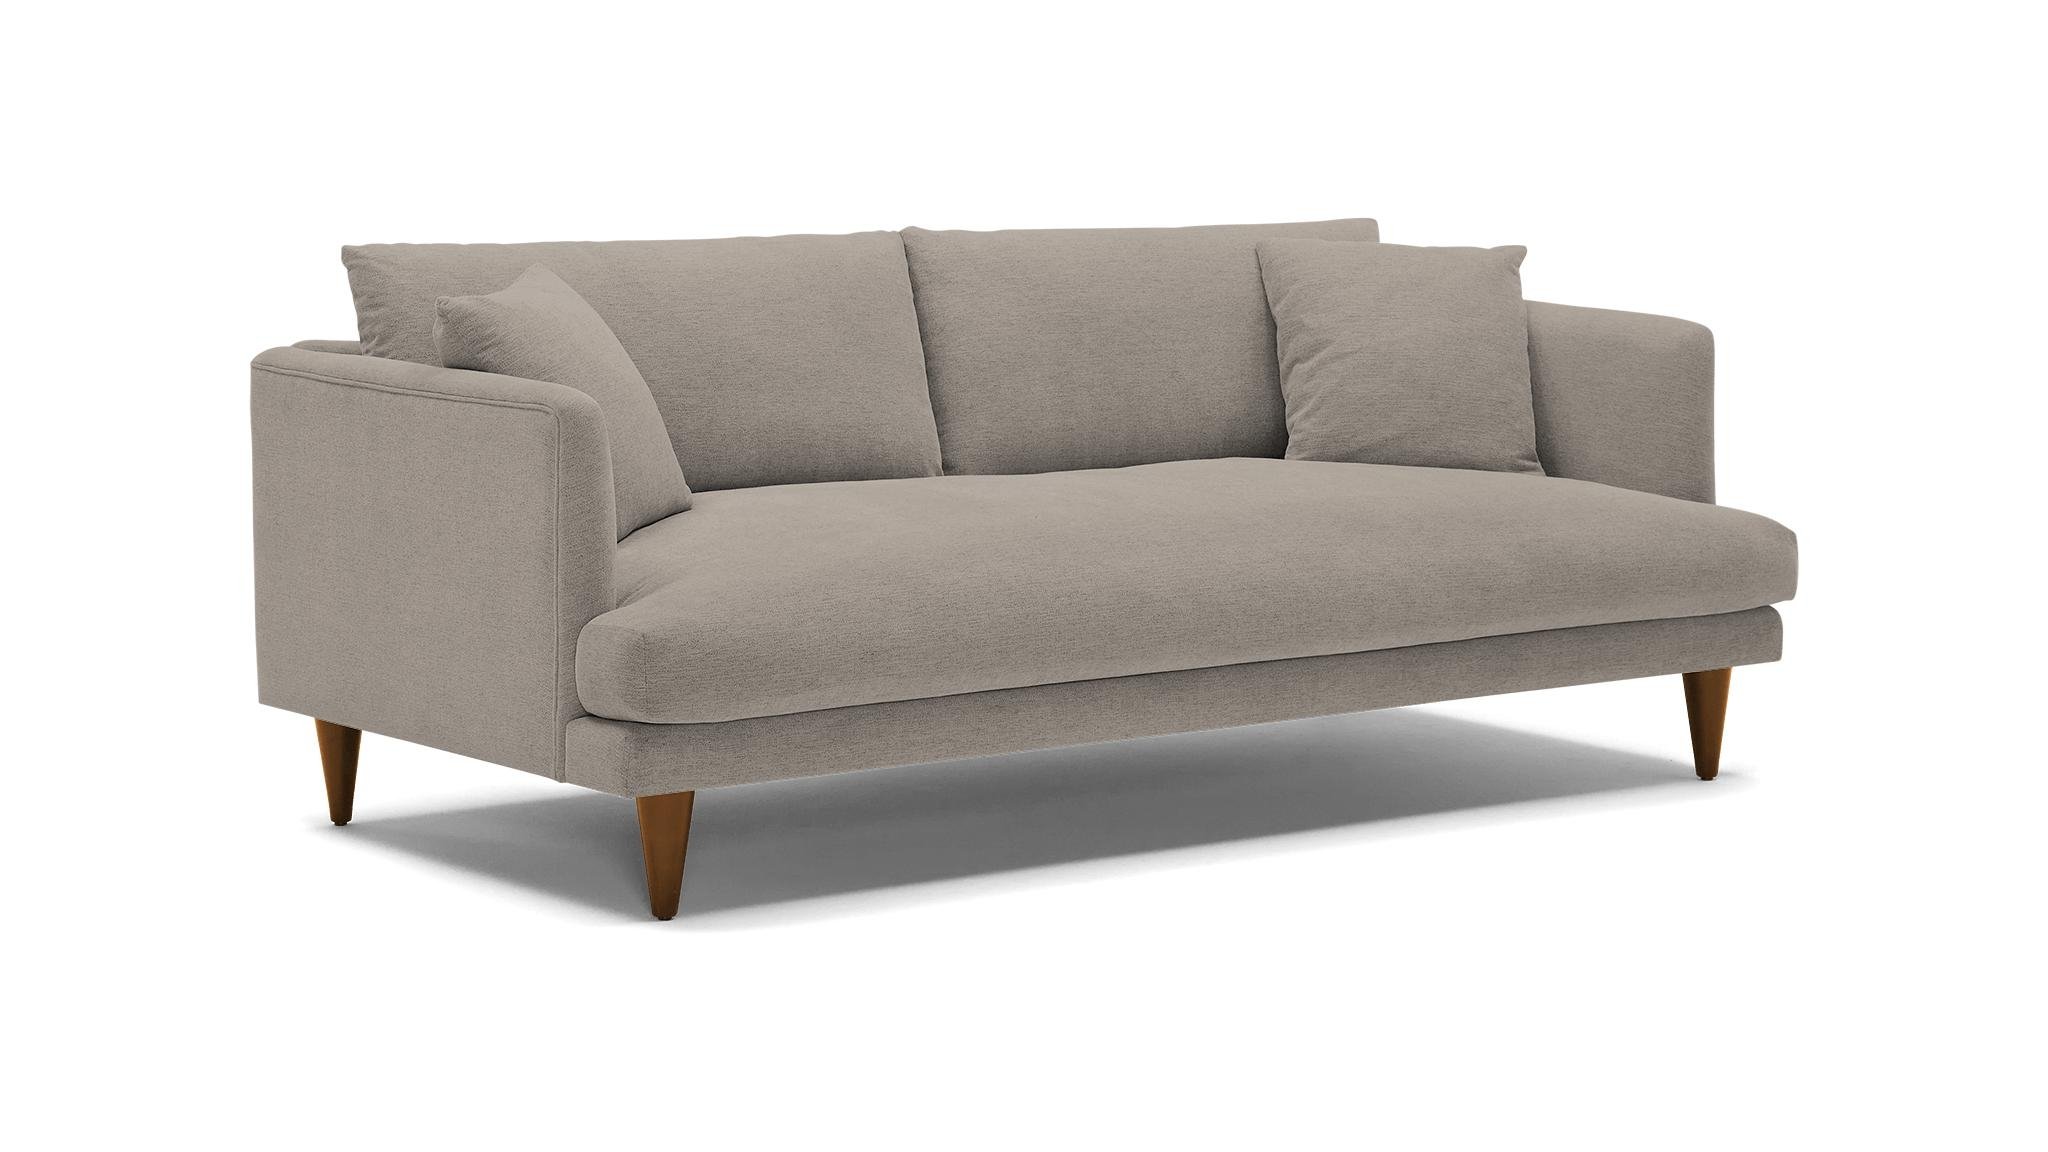 Beige/White Lewis Mid Century Modern Sofa - Prime Stone - Mocha - Cone - Image 1